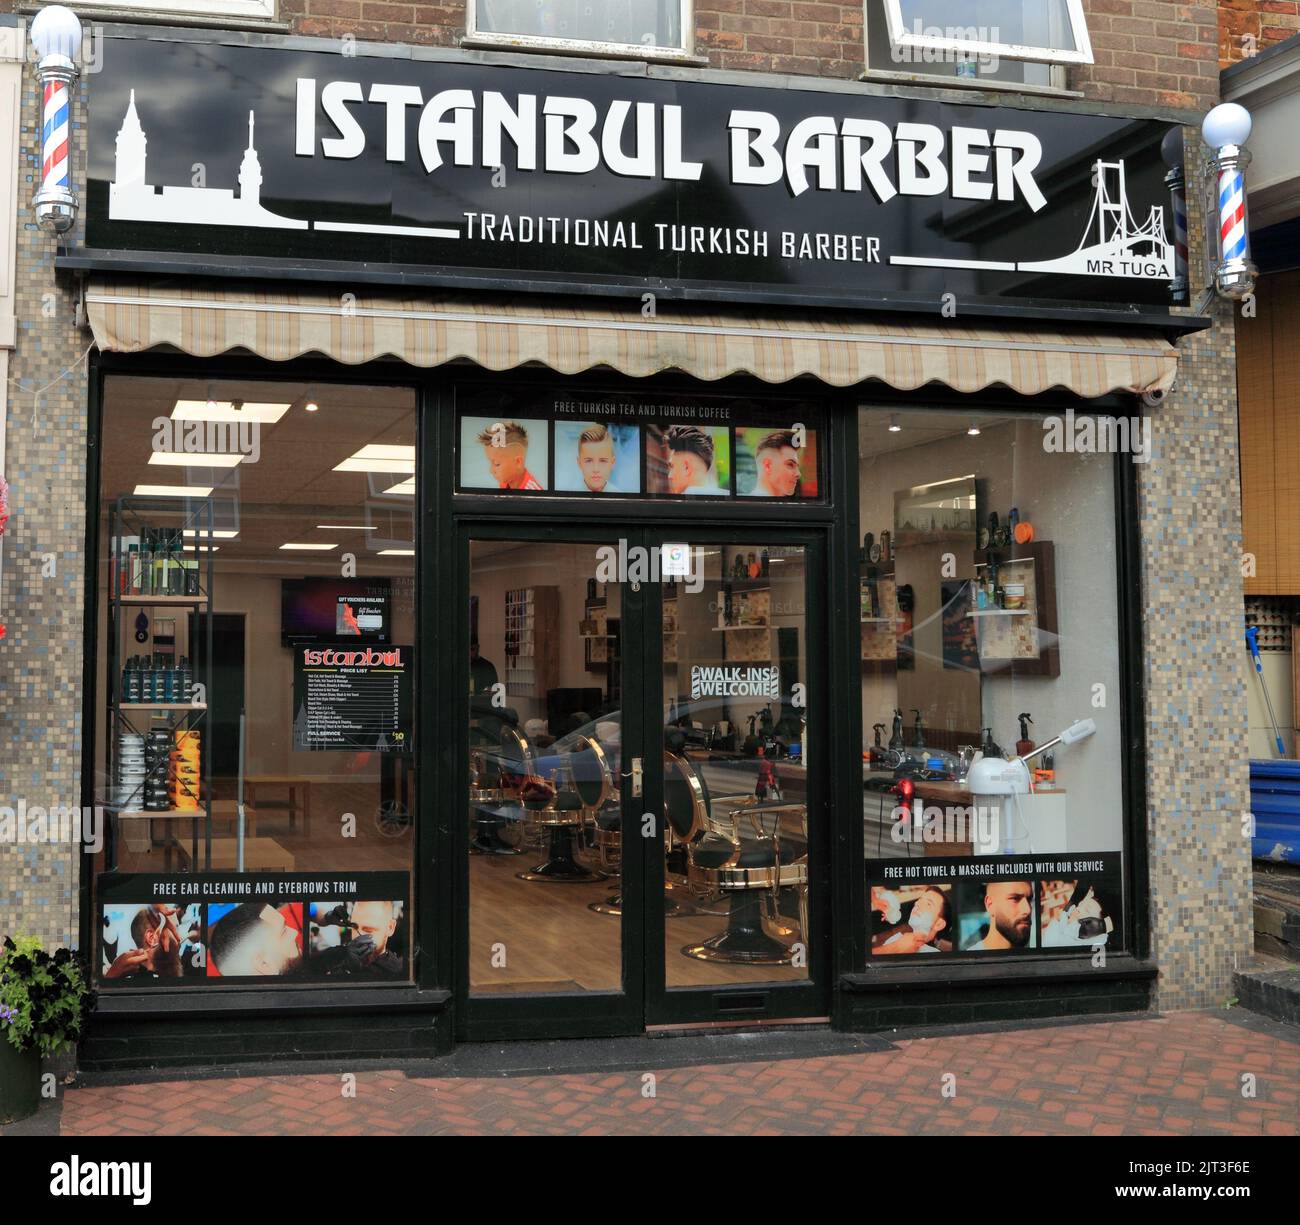 Istanbul Barber, salon de coiffure, magasin, turc traditionnel, Hunstanton, Norfolk, Angleterre Banque D'Images